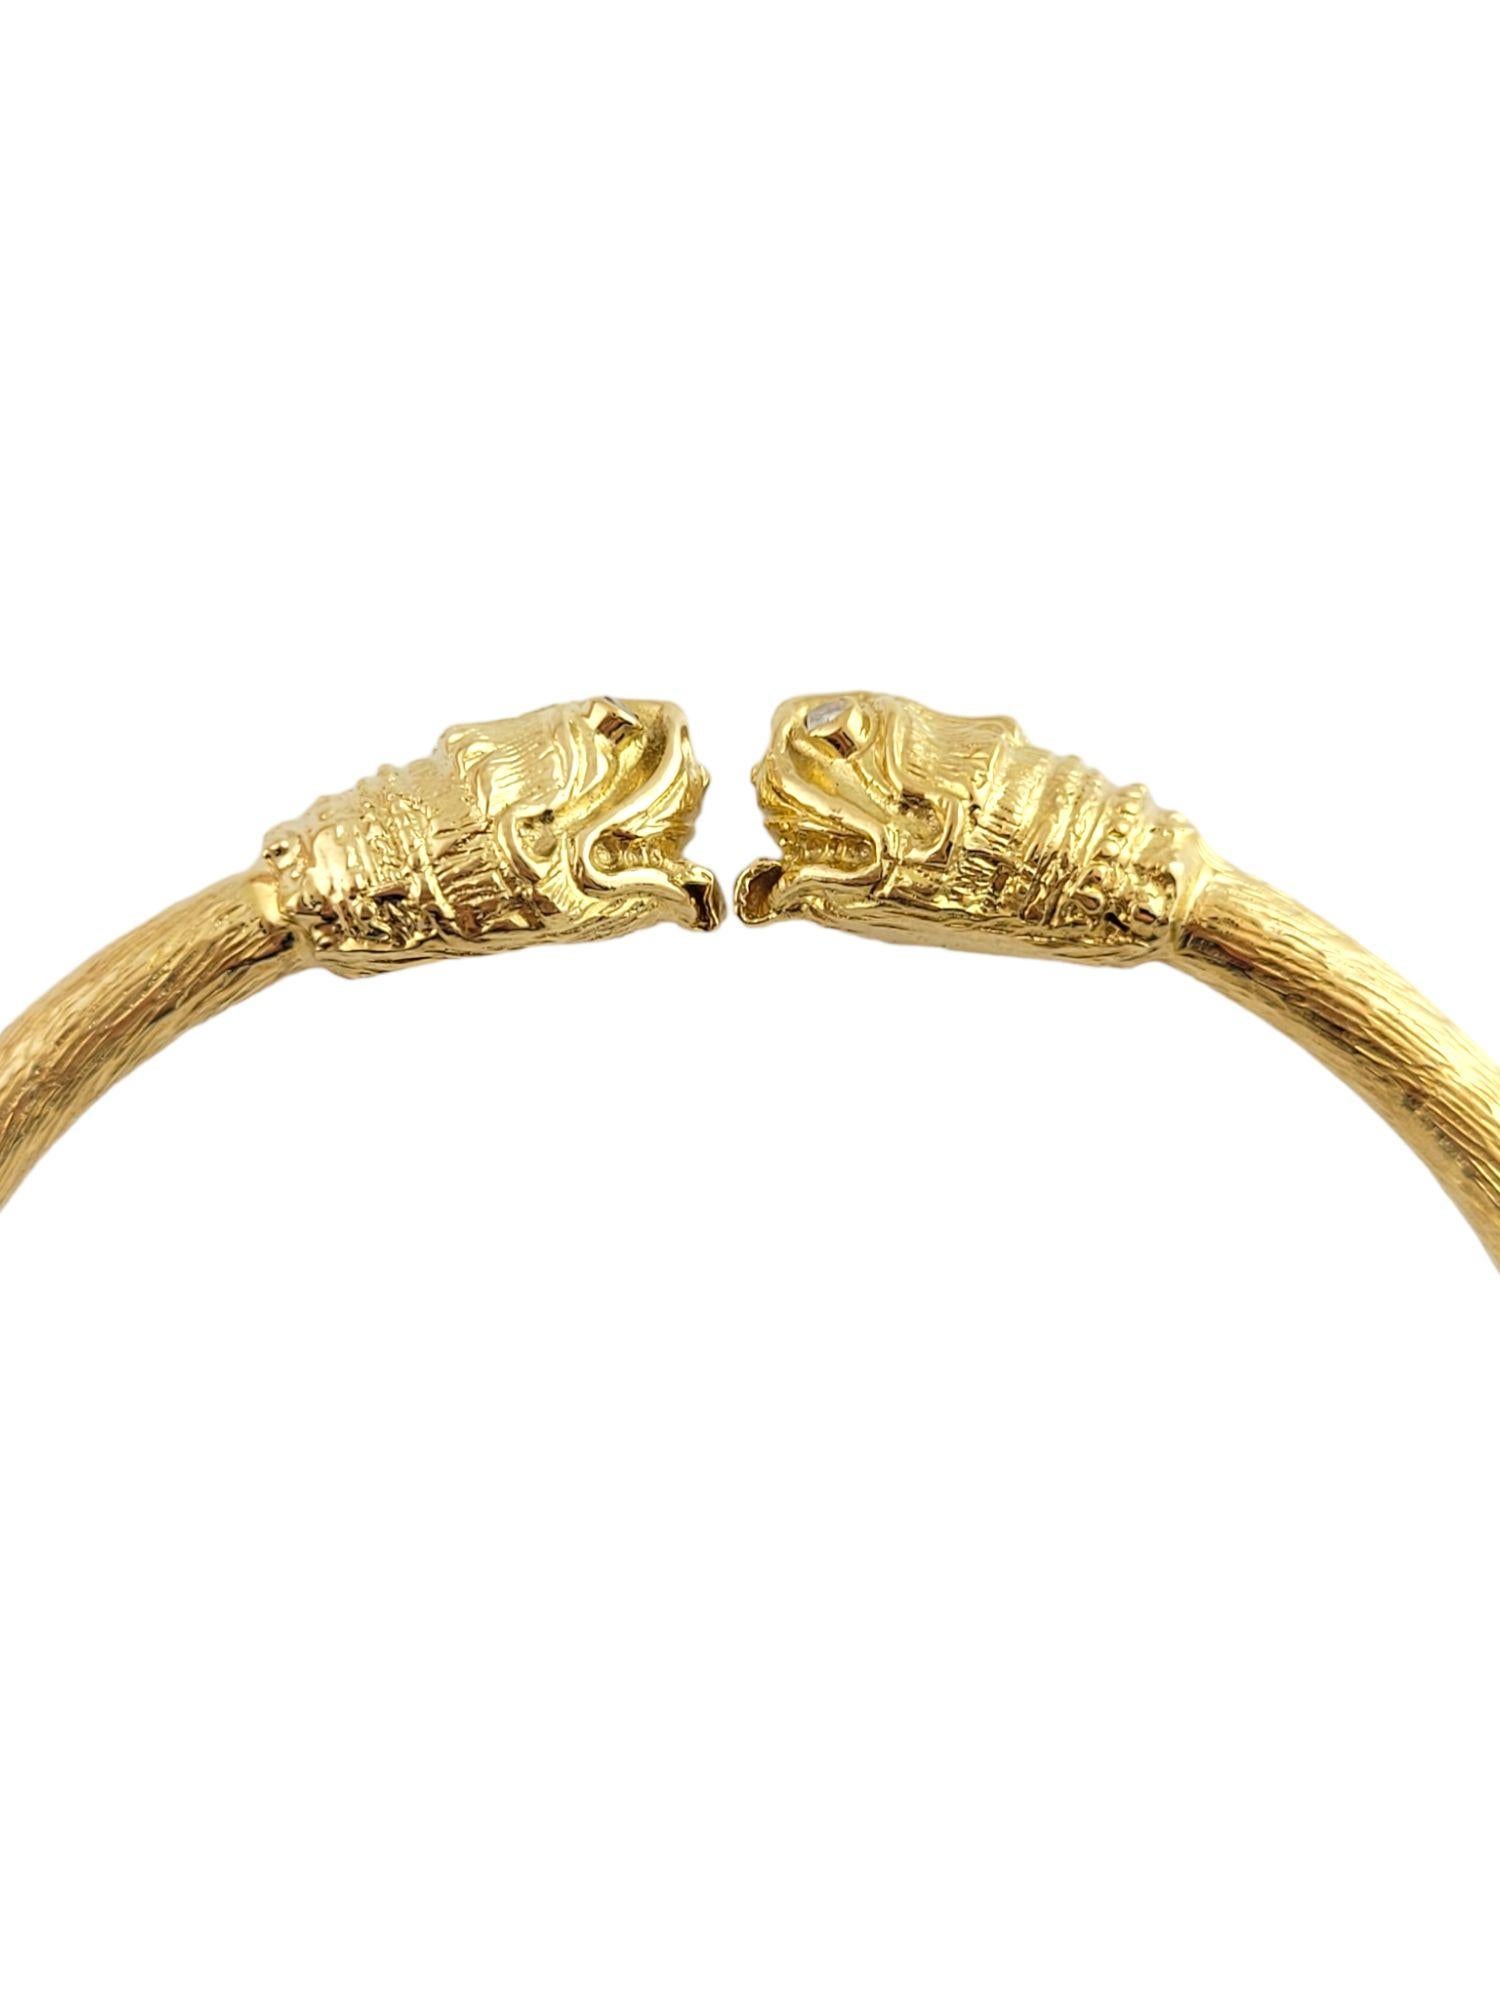 18 Karat Yellow Gold and Diamond Serpent Head Bangle Bracelet For Sale 3